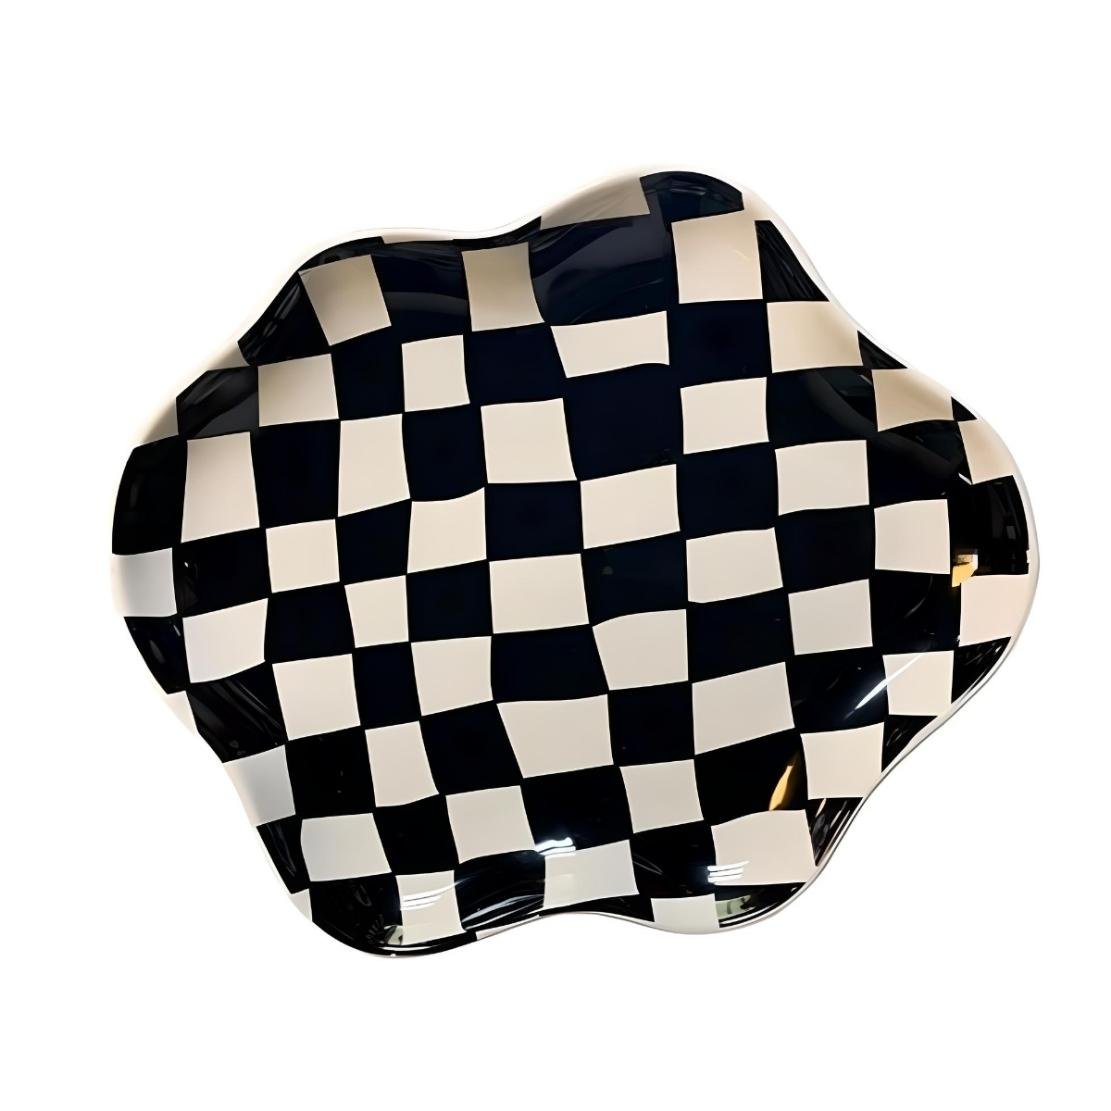 Irrgular ceramic black white checkered plate